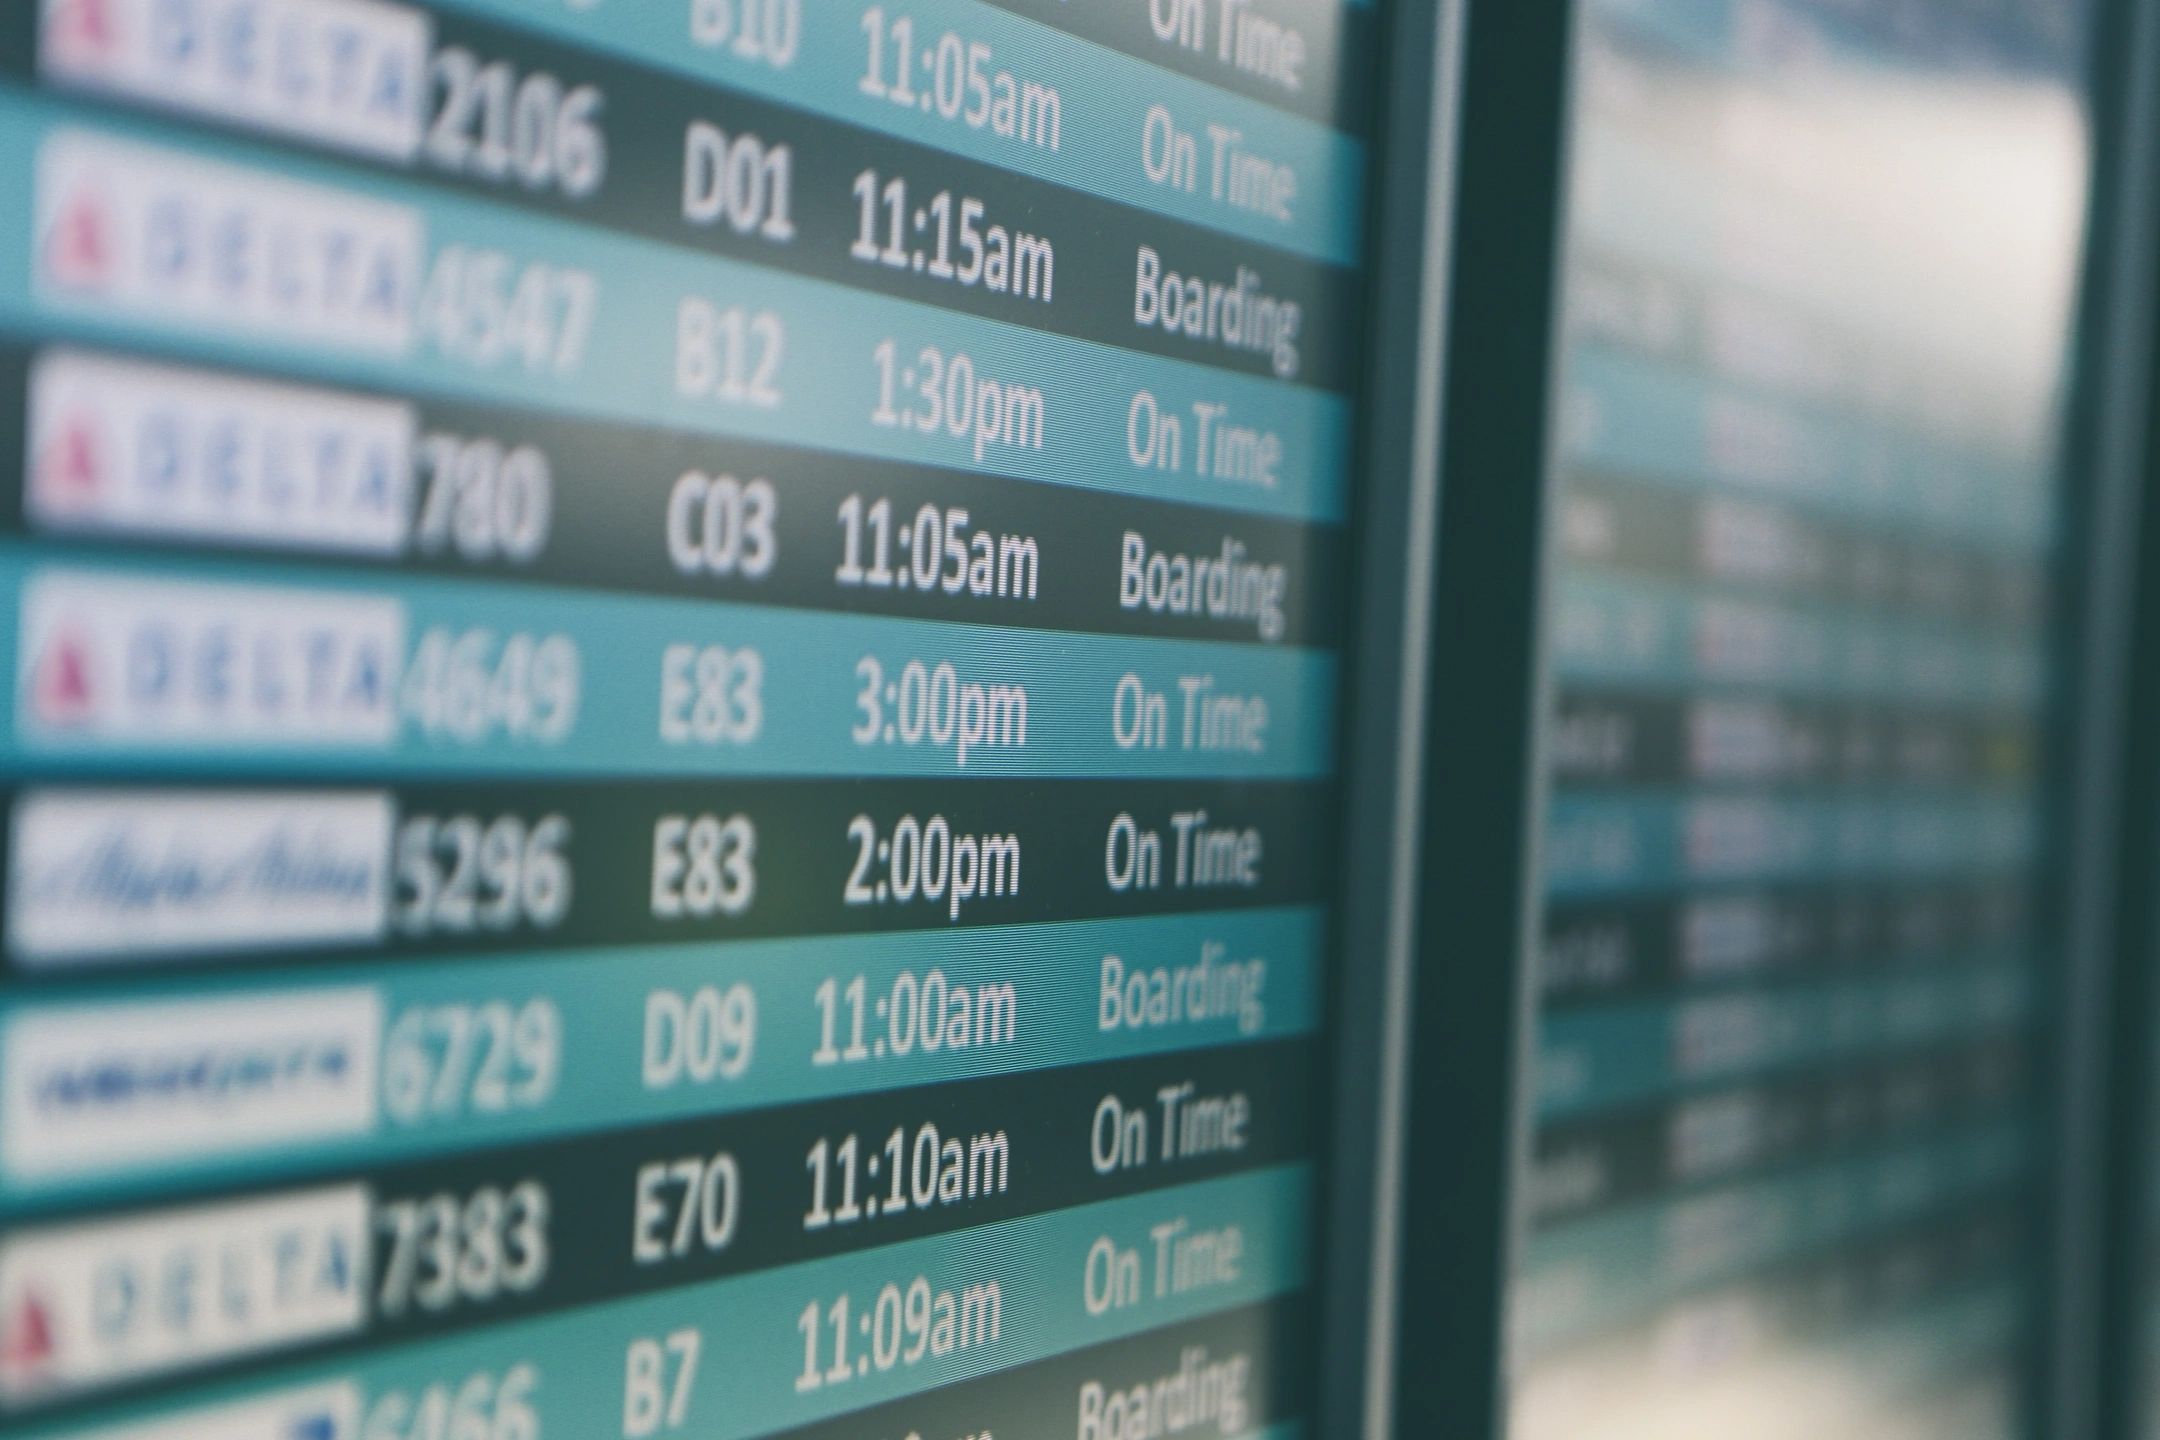 airline departures board showing multiple flight departure times